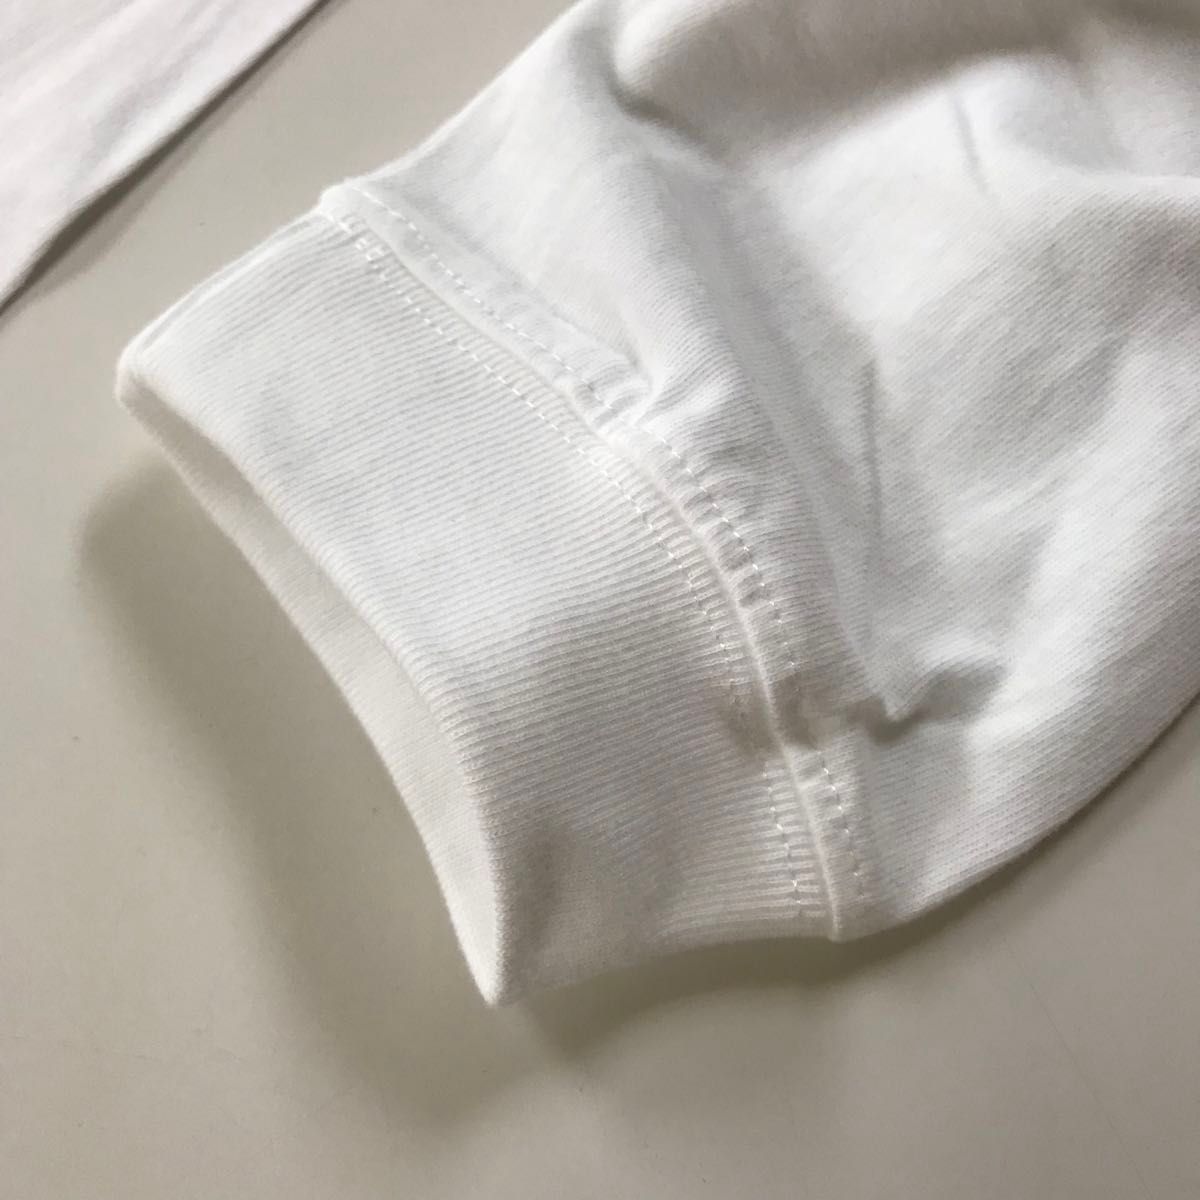 Tシャツ 長袖 5.6オンス 1.6インチリブ付き【5011-01】M ホワイト 綿100%